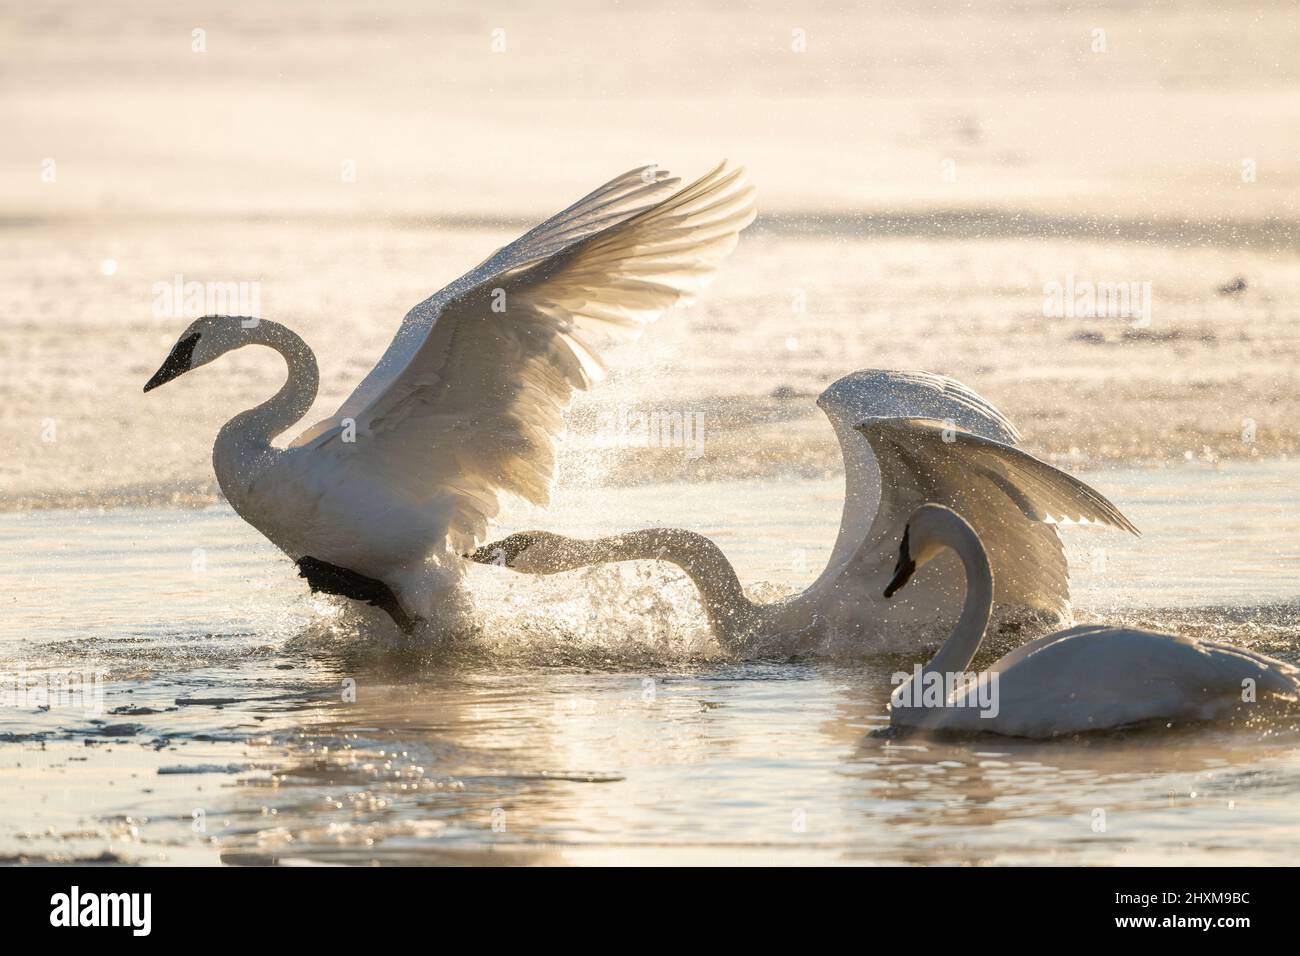 Trumpeter swans (Cygnus buccinator) interacting, aggressive behavior, St Croix river, Winter, WI, USA, by Dominique Braud/Dembinsky Photo Assoc Stock Photo